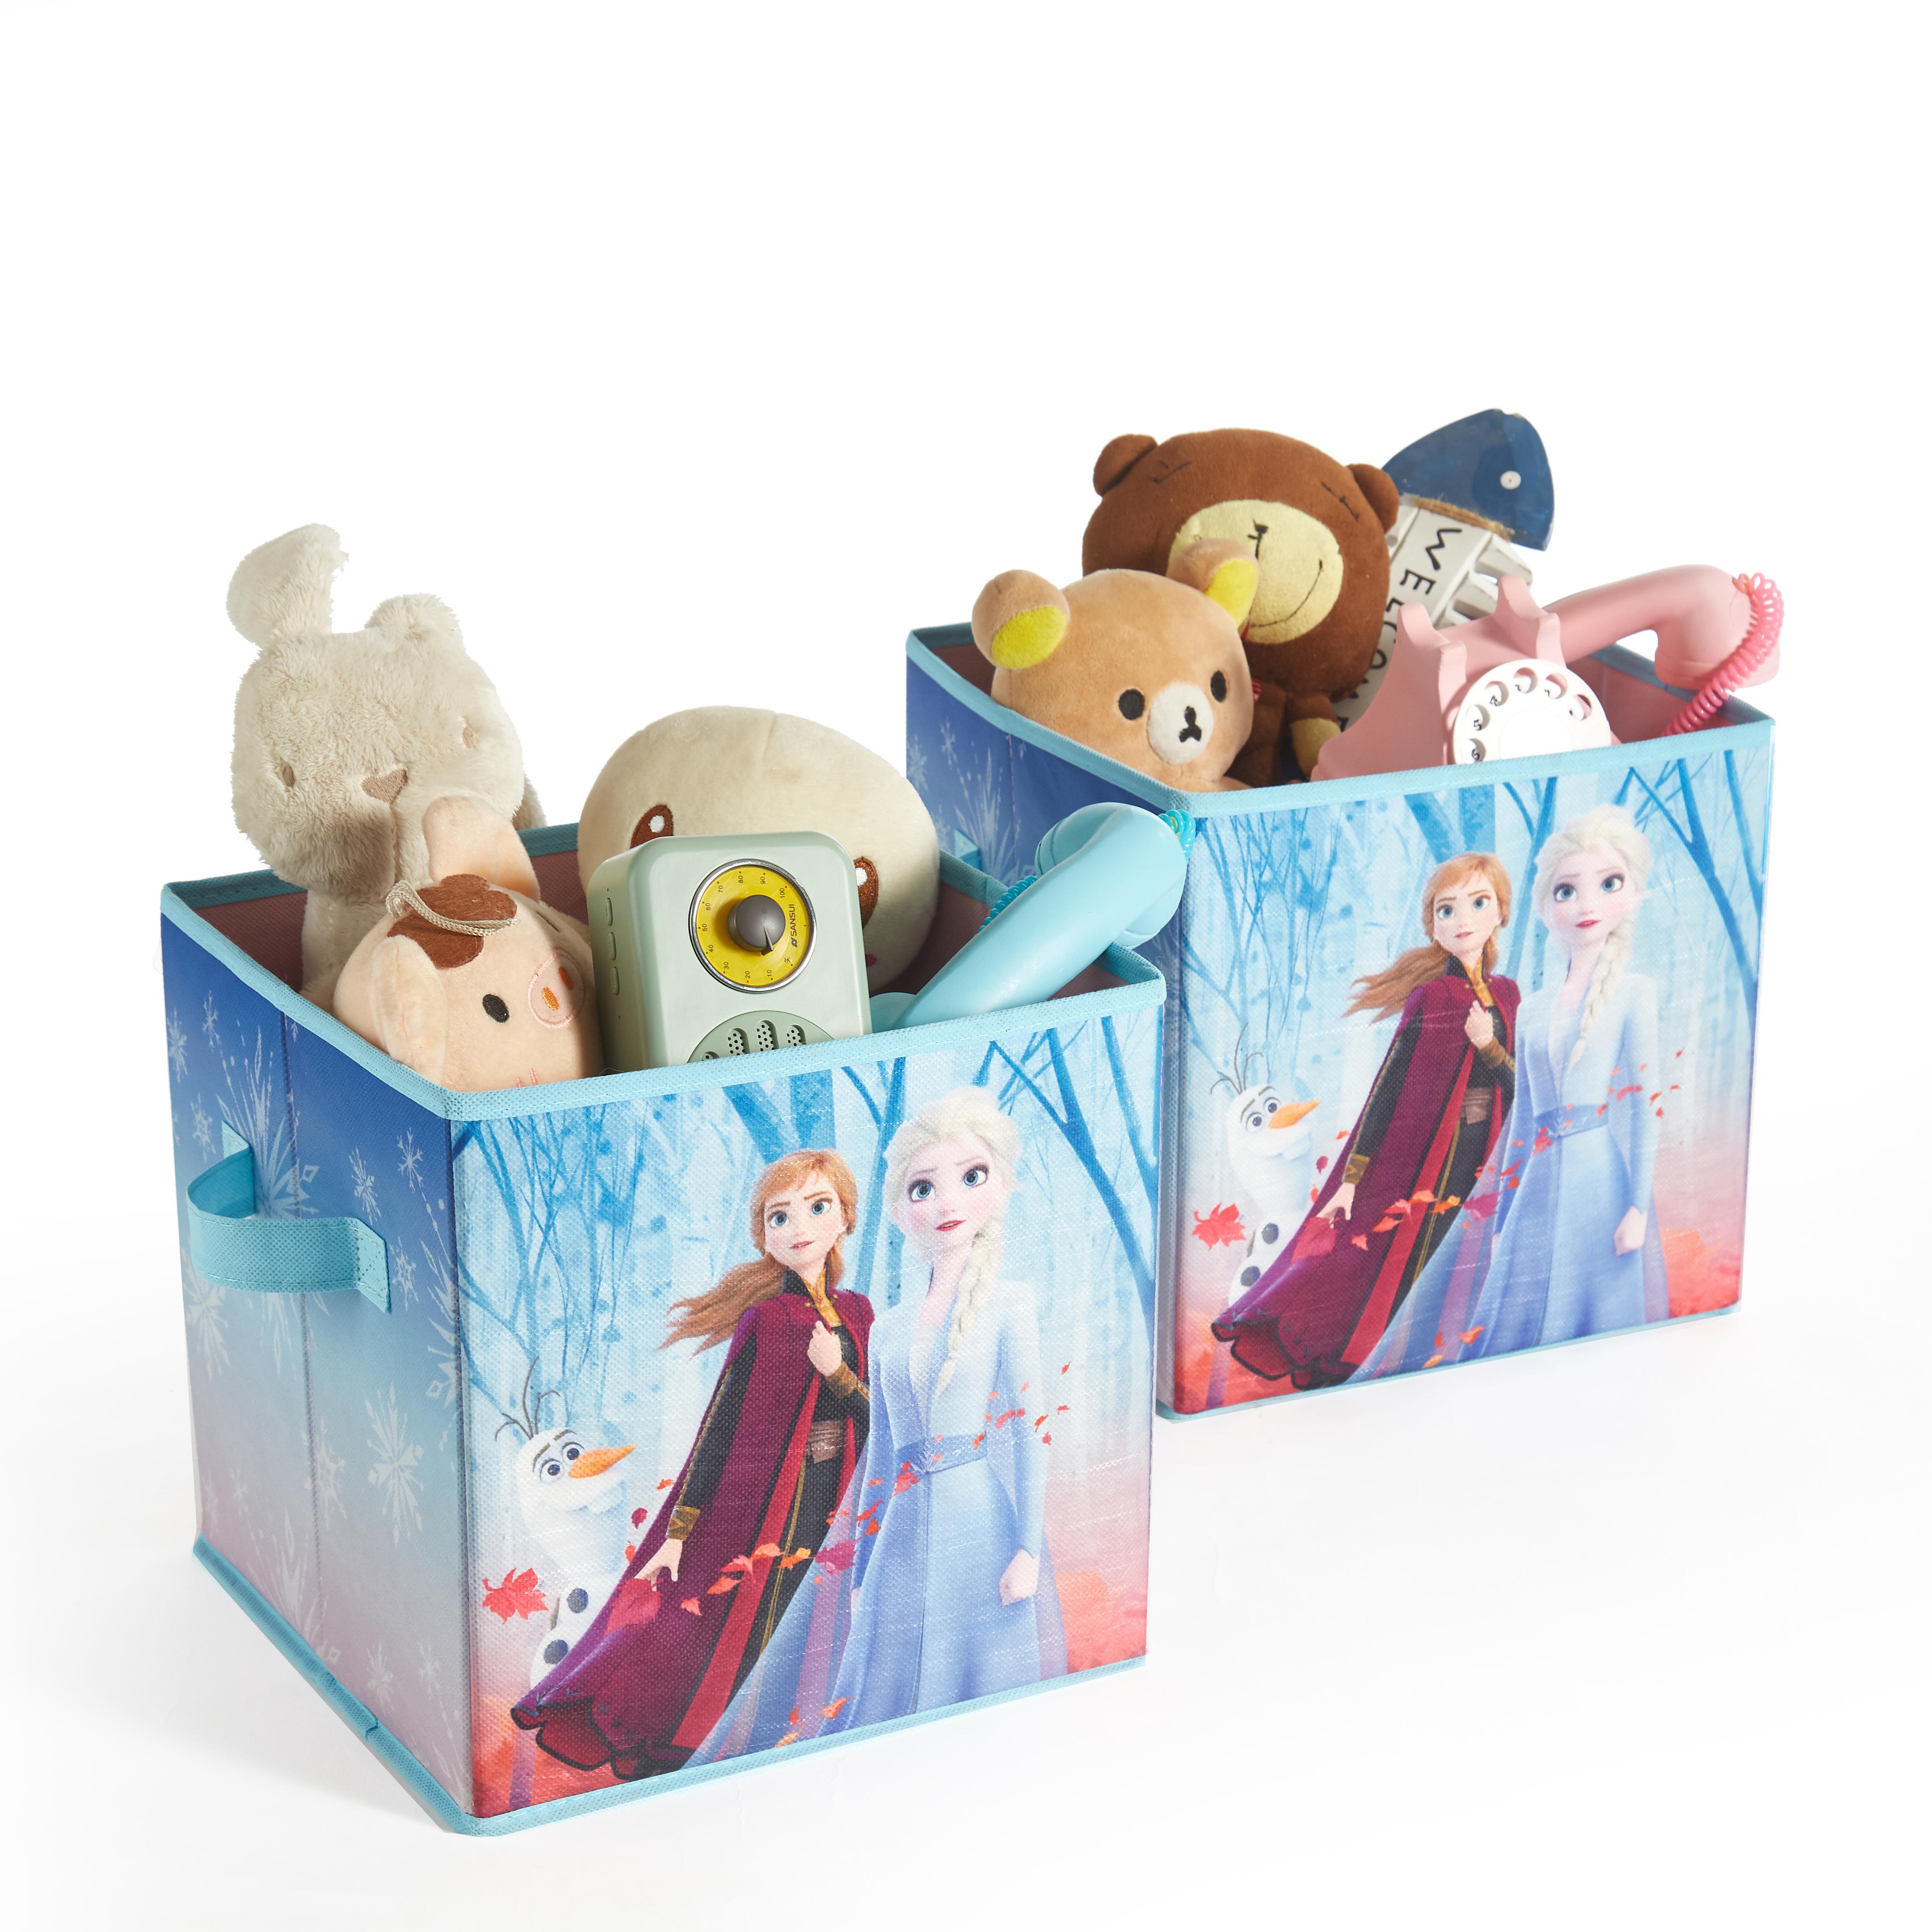 Disney Frozen 2 Kids Anna and Elsa Whole Room Solution Toy Storage Set - Walmart Exclusive (1 Trunk, 1 Hamper, 2 Pack Storage Cubes) - image 5 of 10